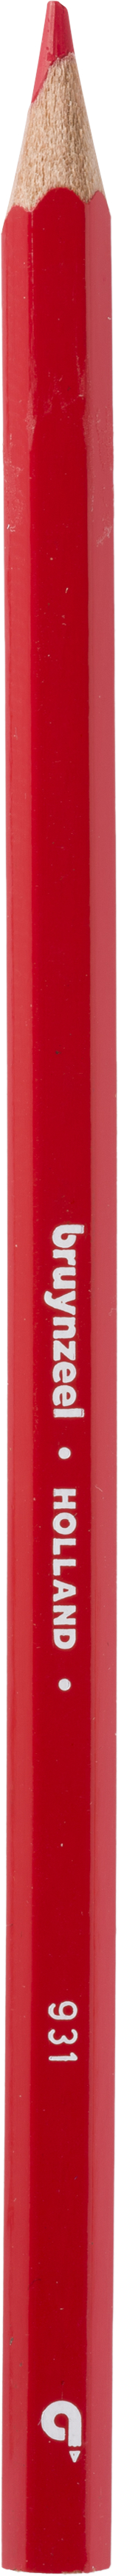 BRUYNZEEL Crayon de couleur Super 3.3mm 60516931 rouge rouge